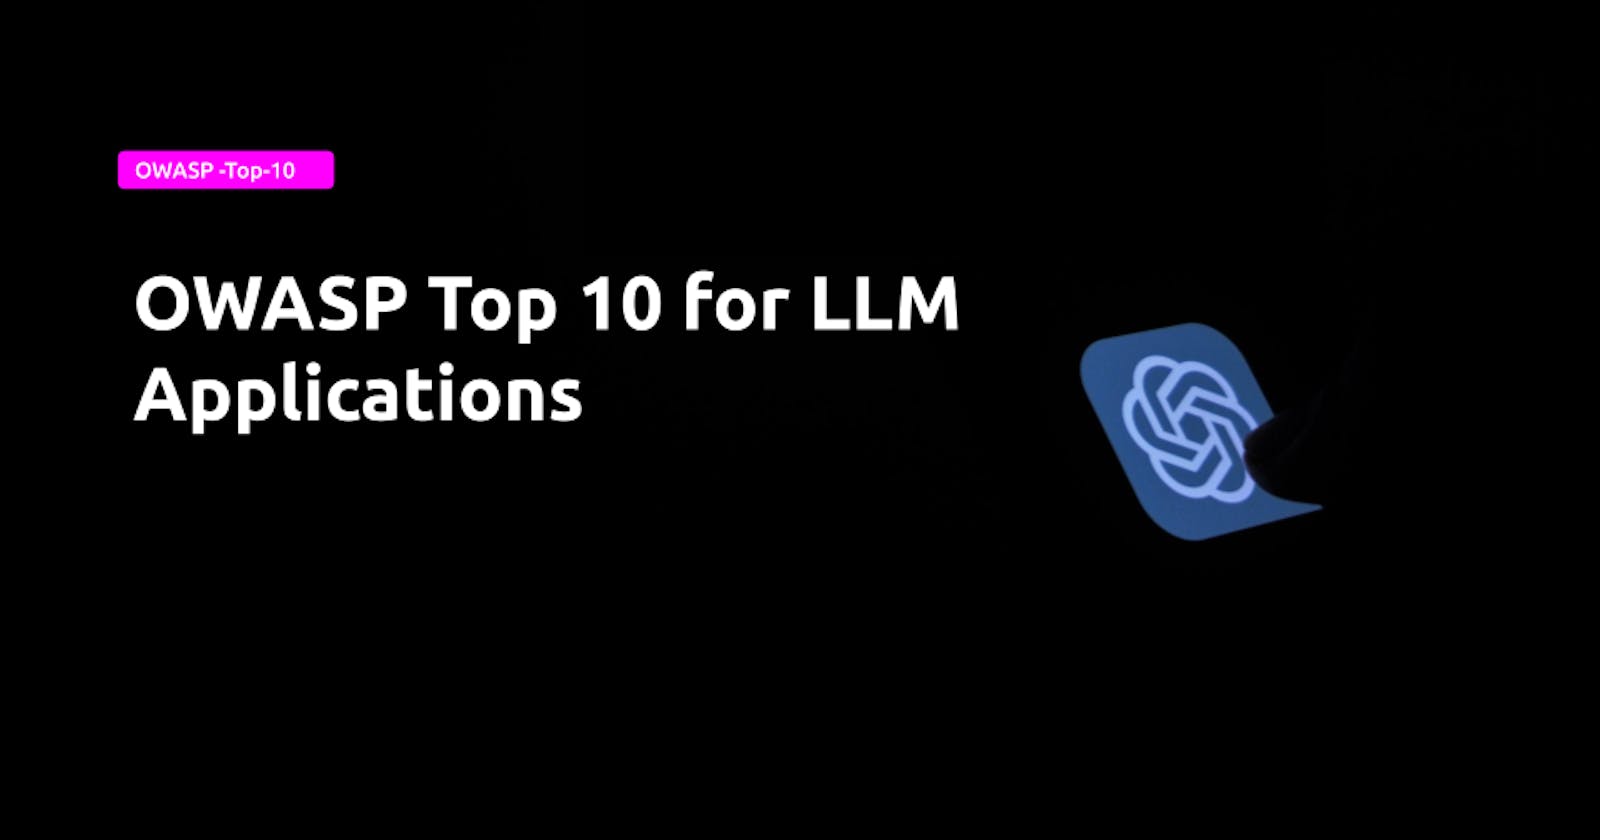 OWASP Top 10 for LLM Applications